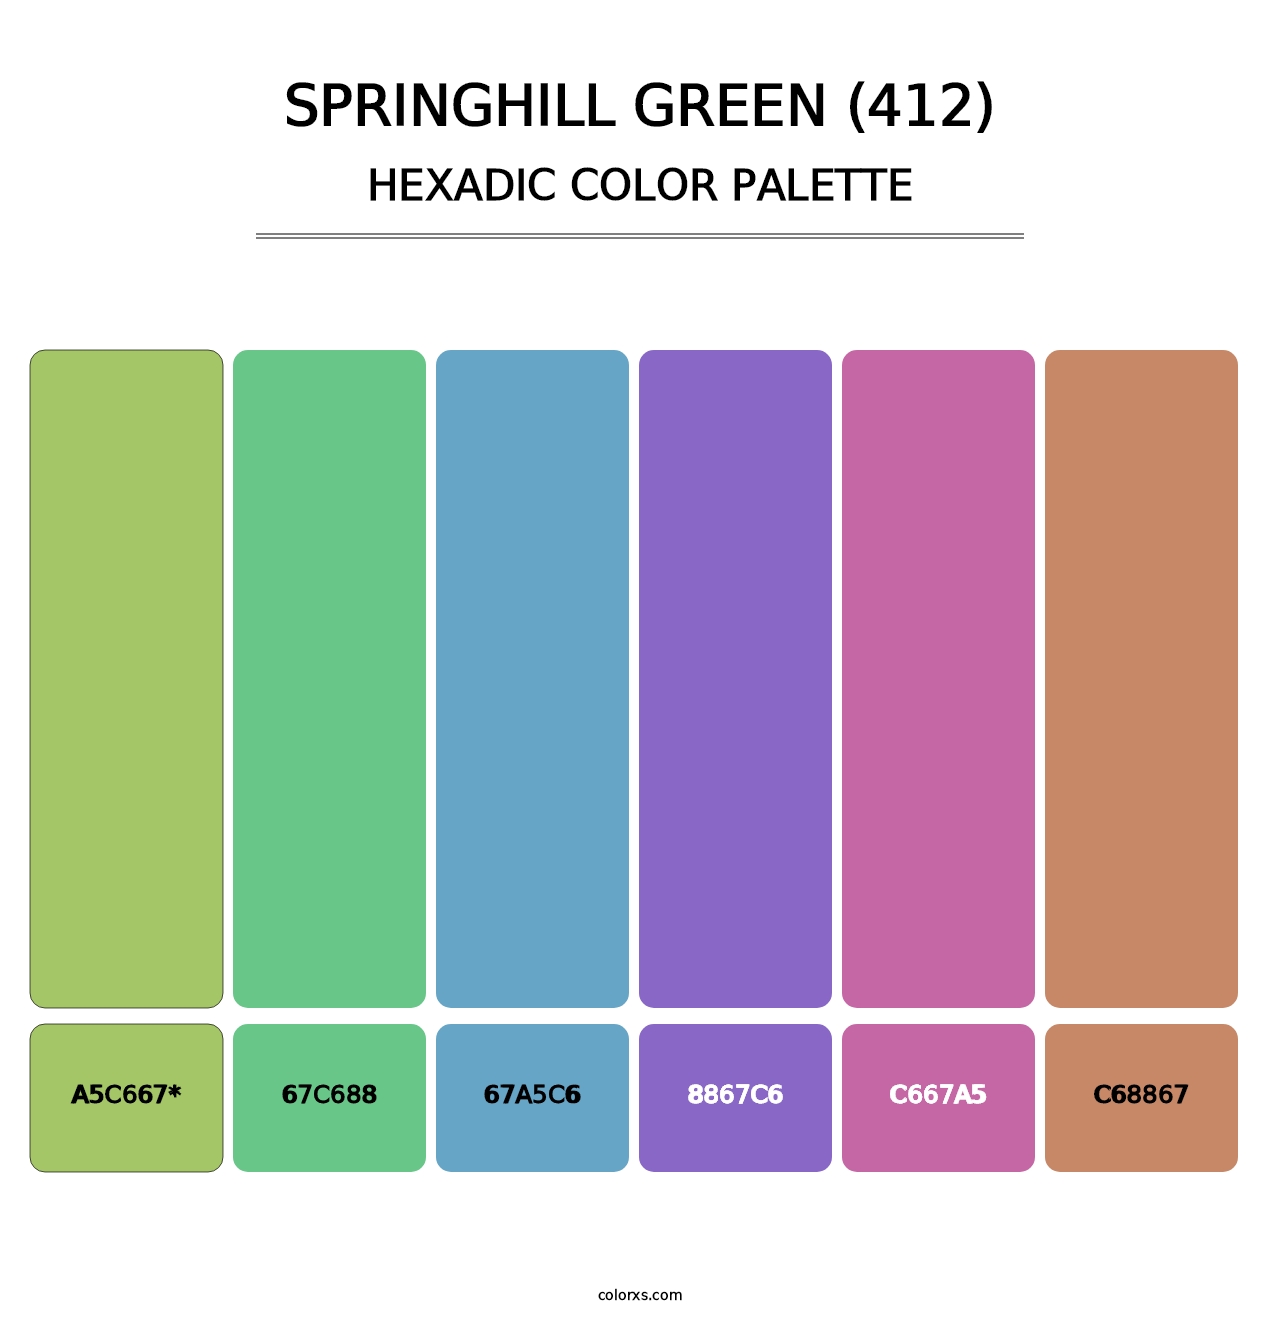 Springhill Green (412) - Hexadic Color Palette